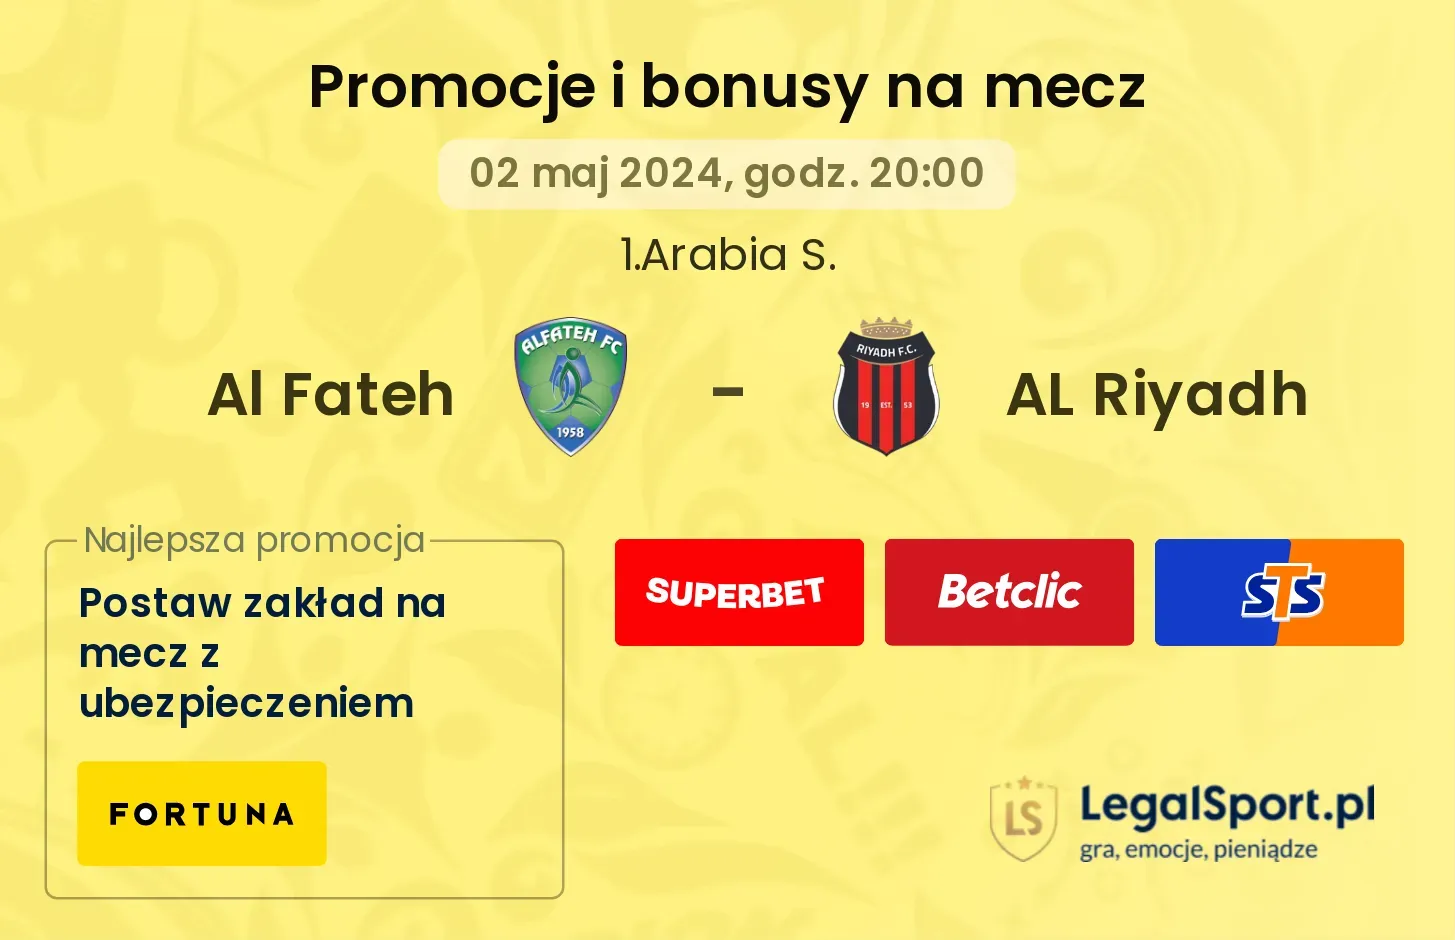 Al Fateh - AL Riyadh promocje bonusy na mecz